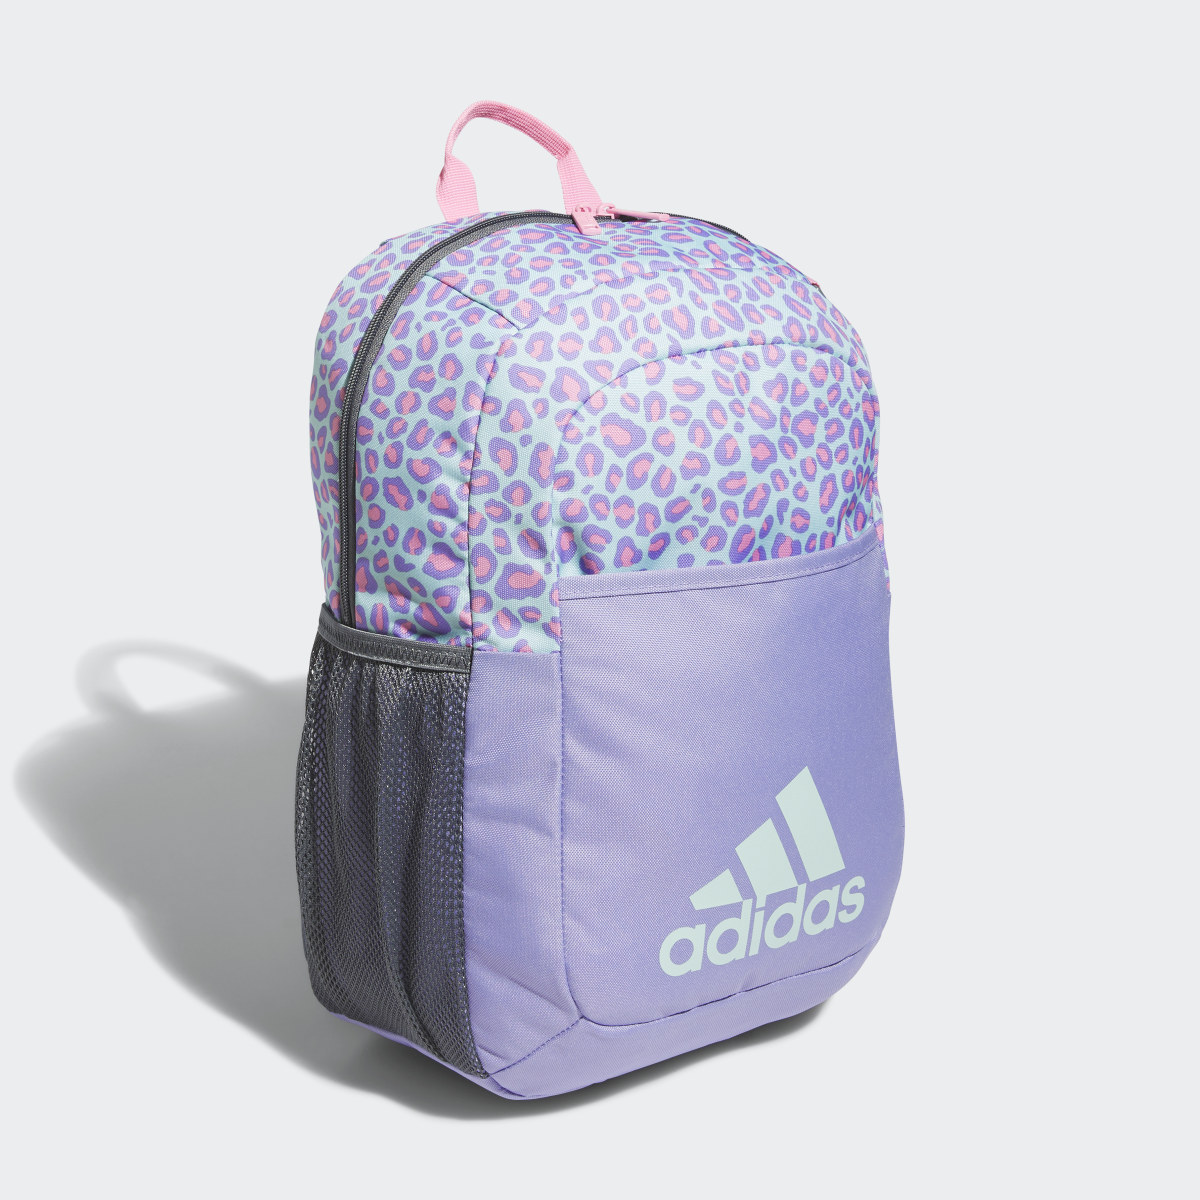 Adidas Ready Backpack. 4